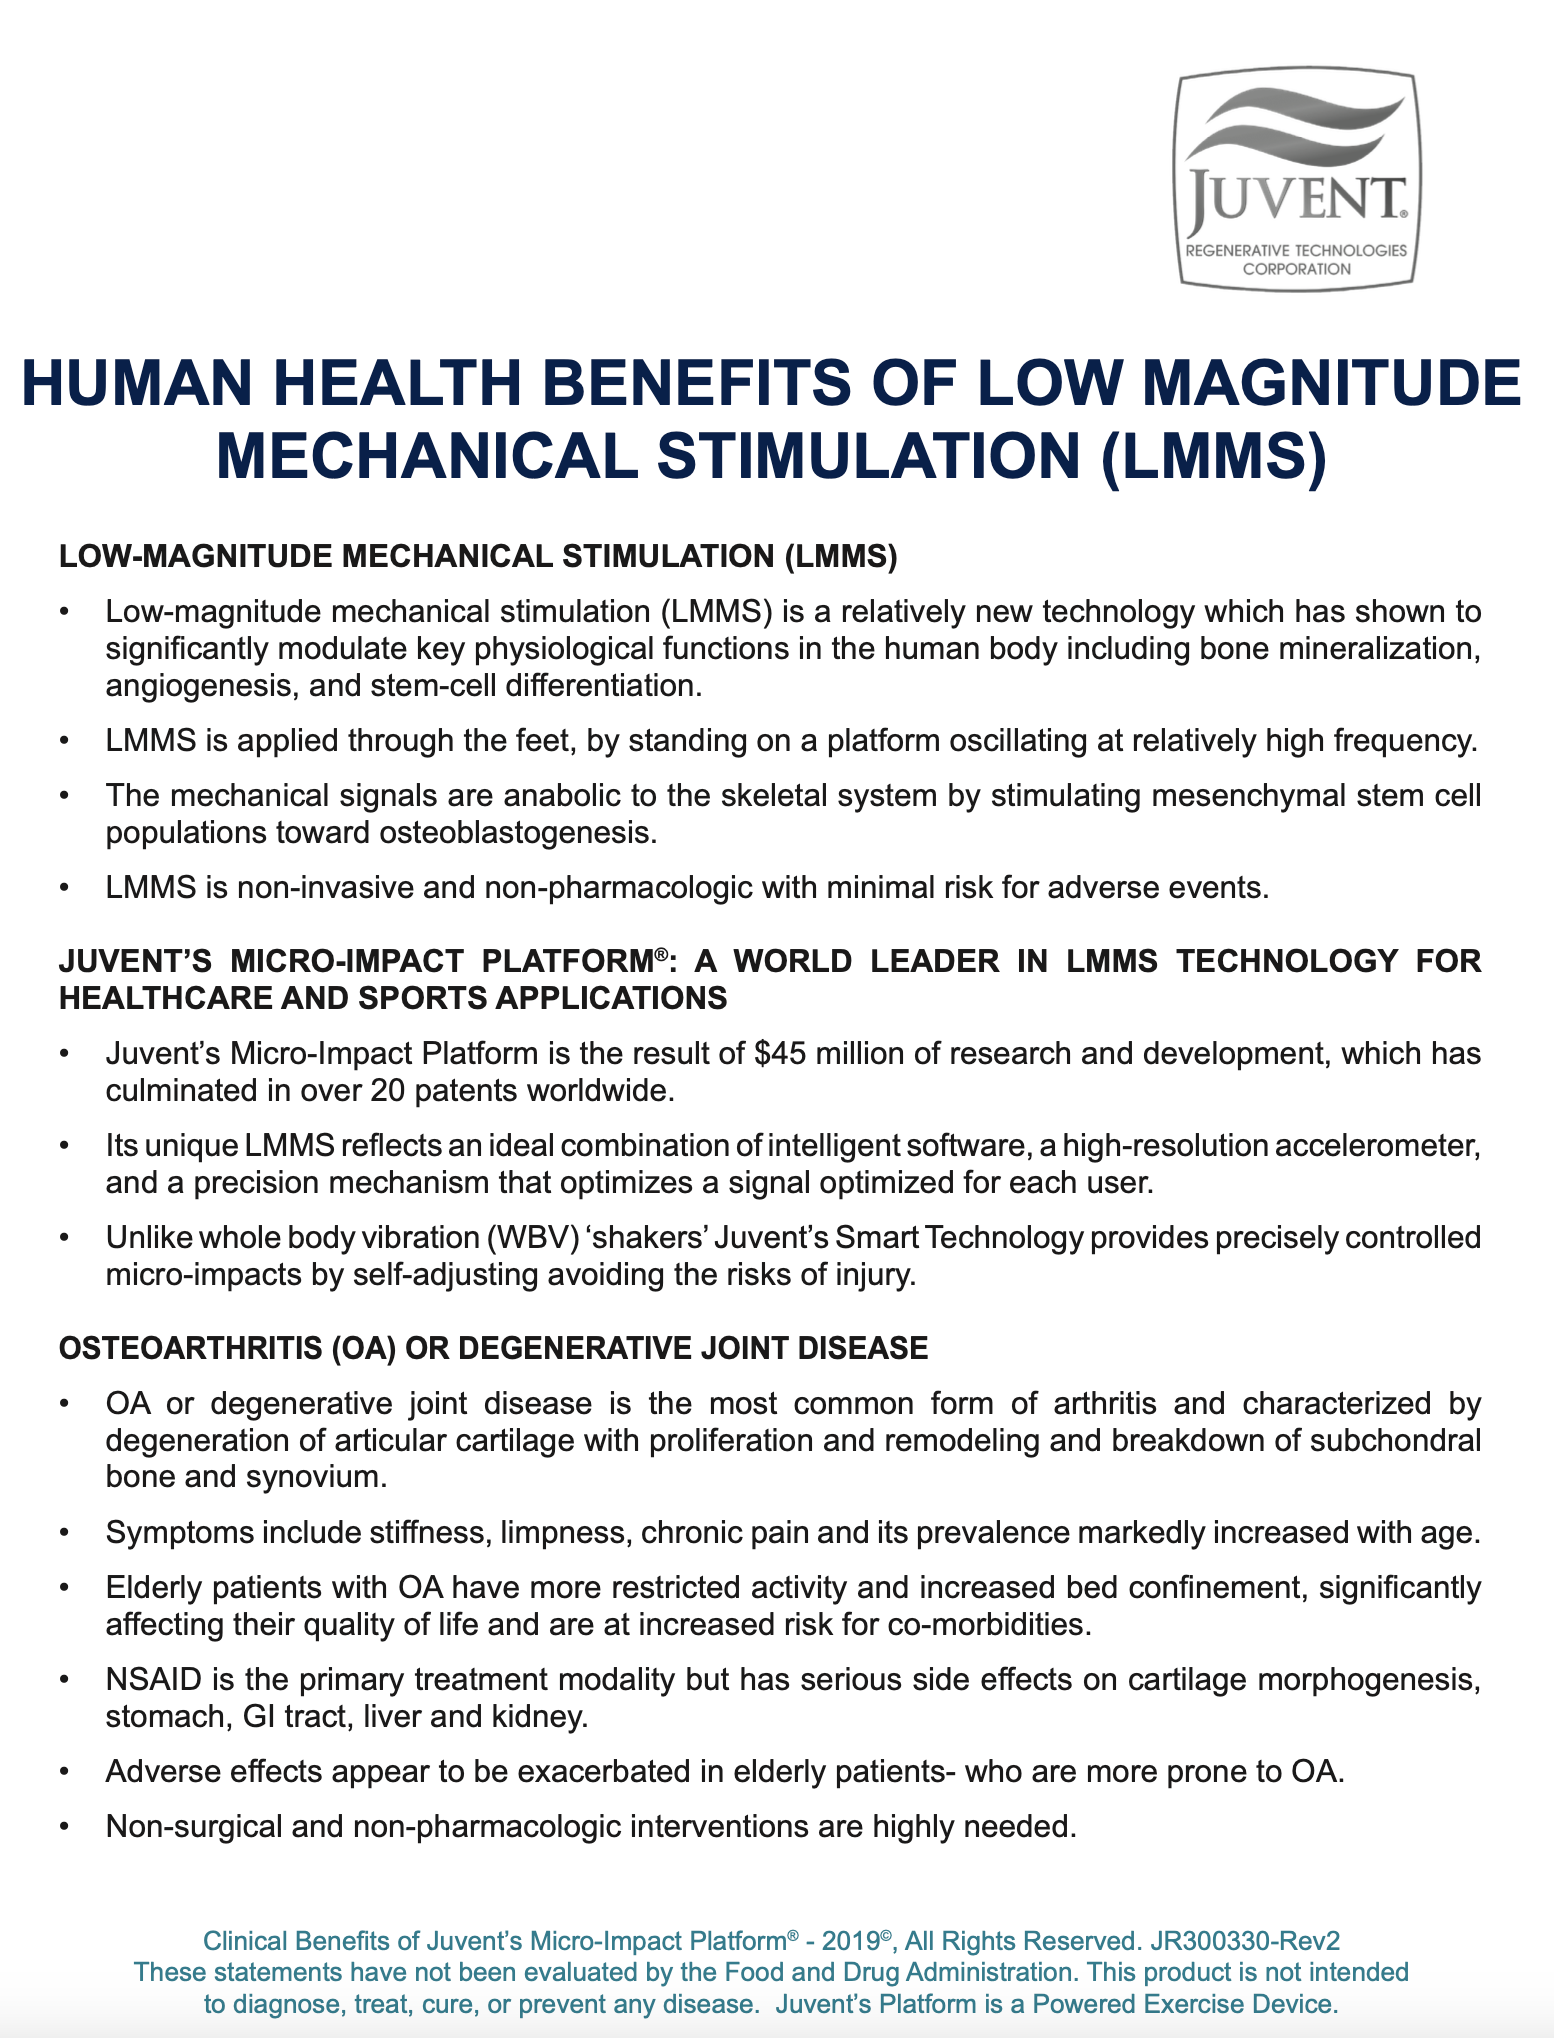 Human Health Benefits of Low Magnitude Mechanical Stimulation (LMMS).